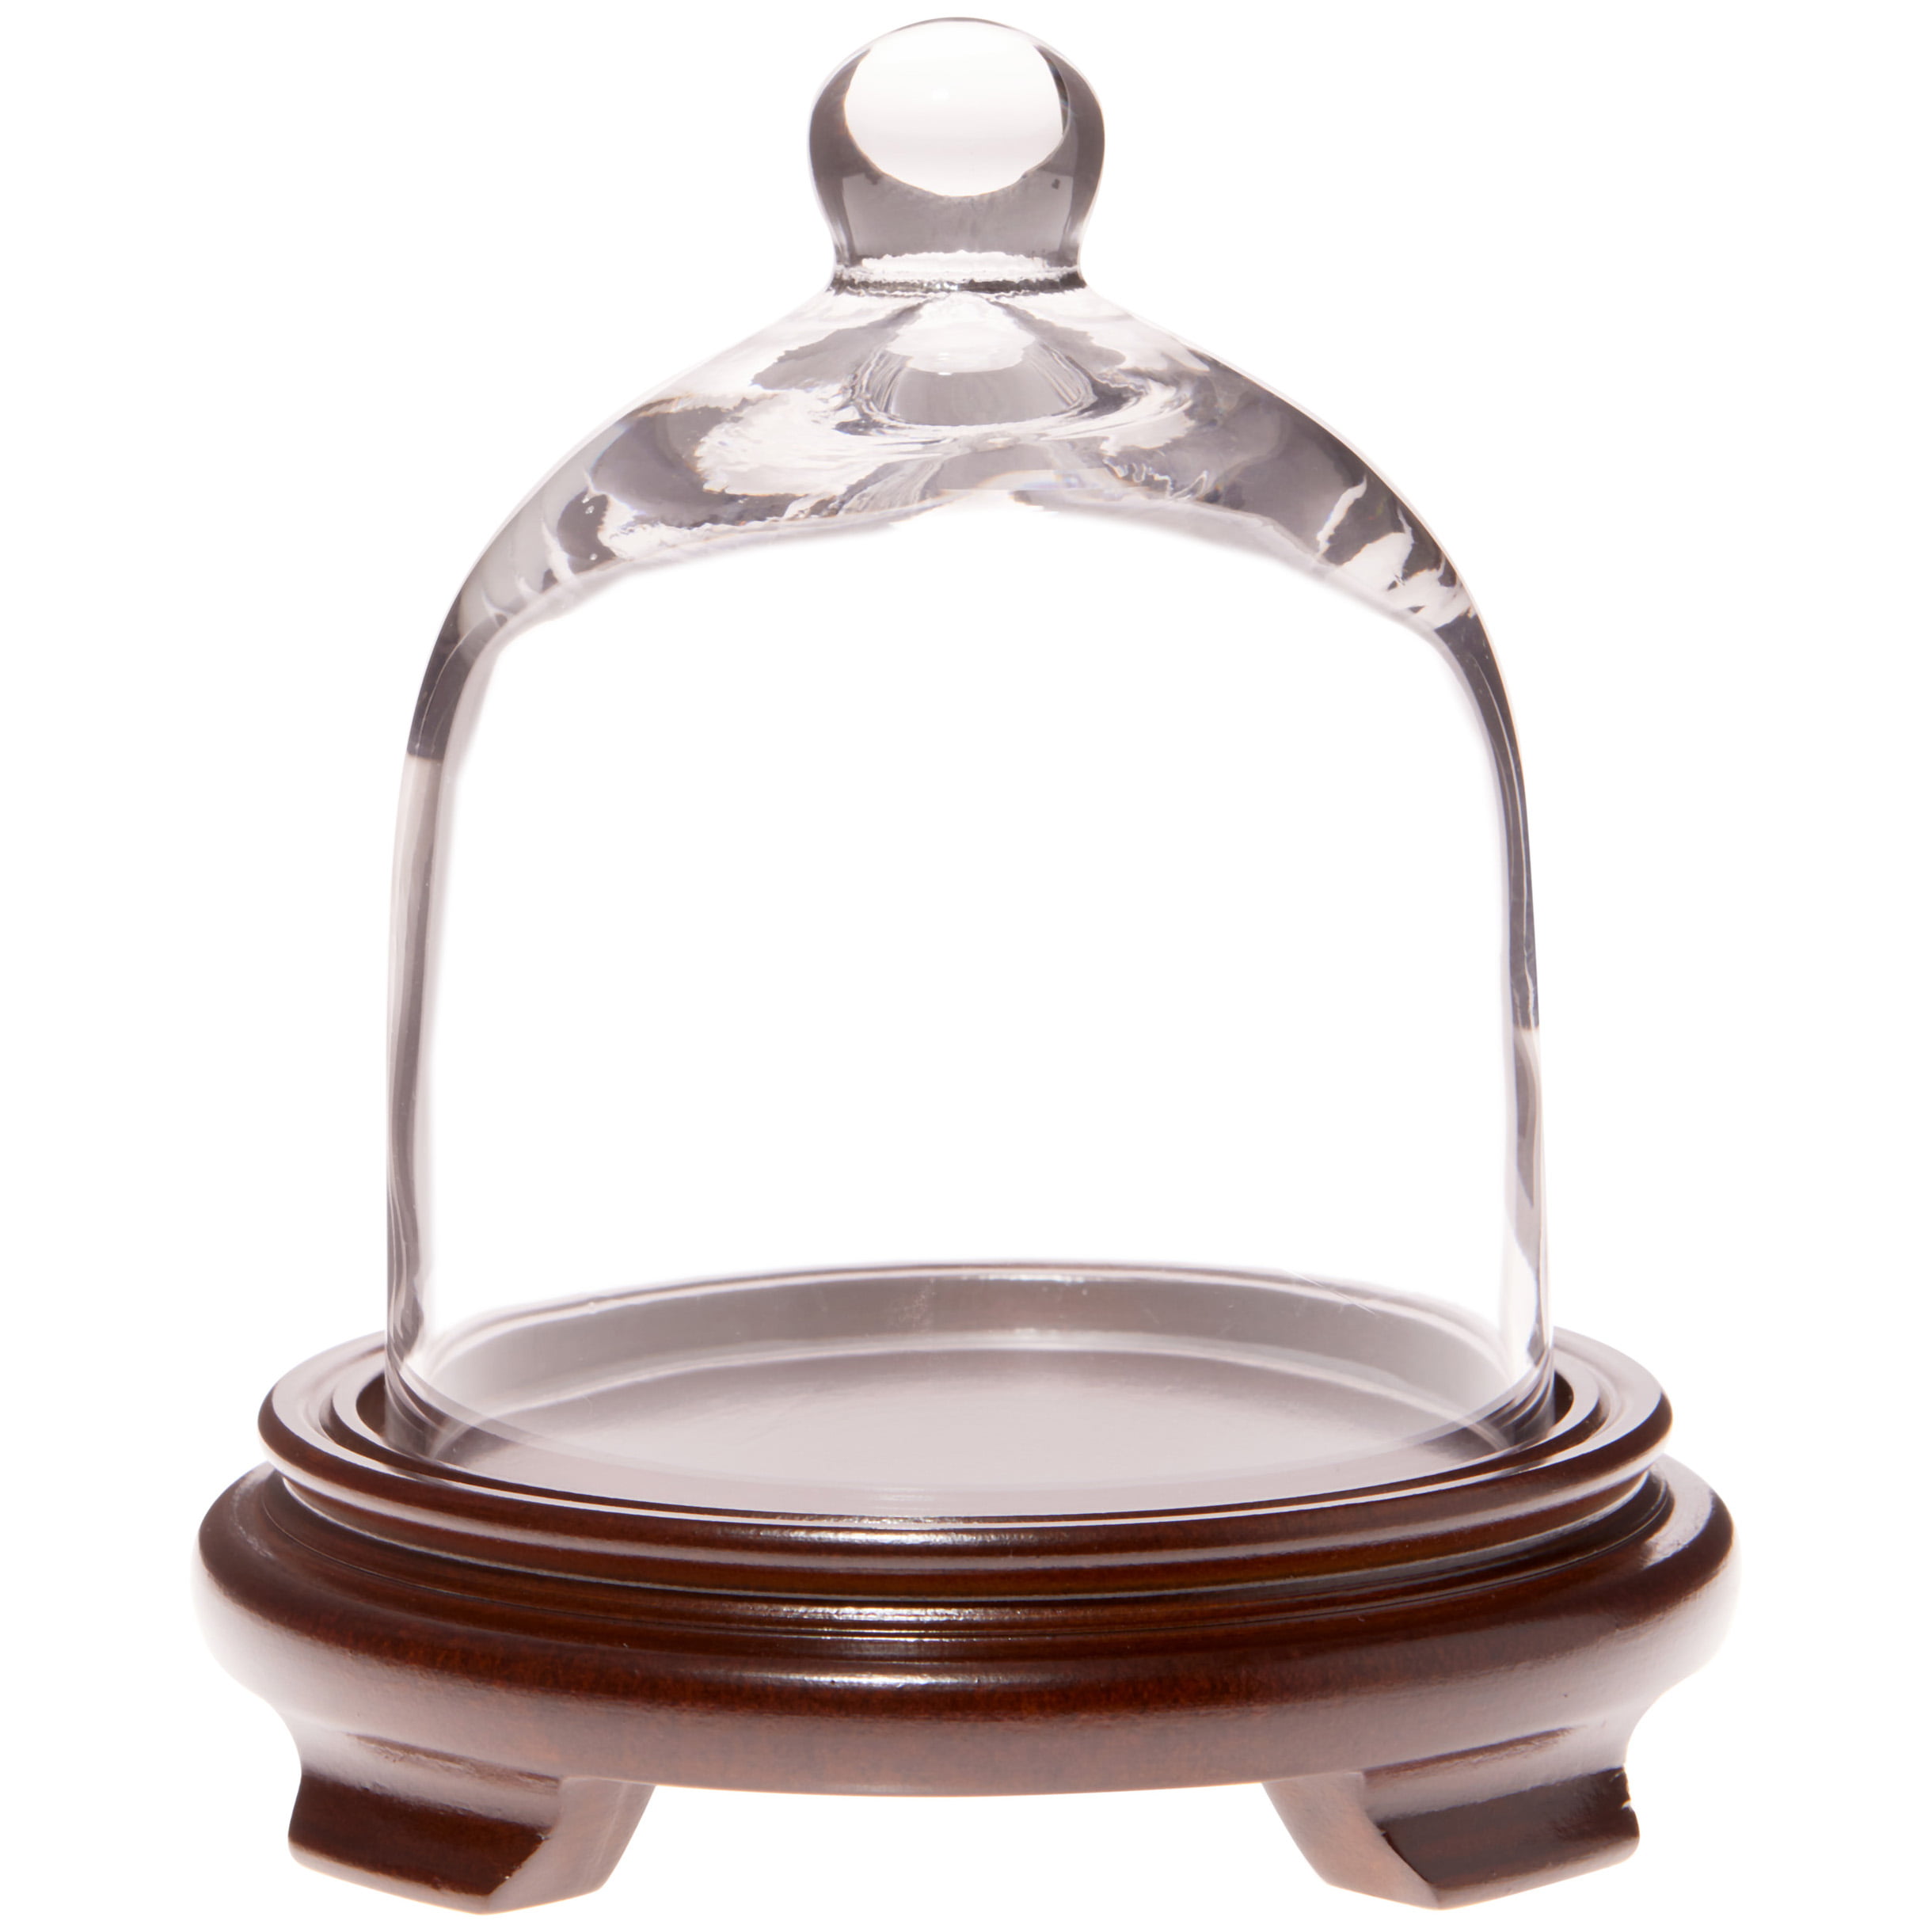 Interior size 7.75" x 8" Plymor 8" x 9.5" Bell Jar Glass Display Dome Cloche 